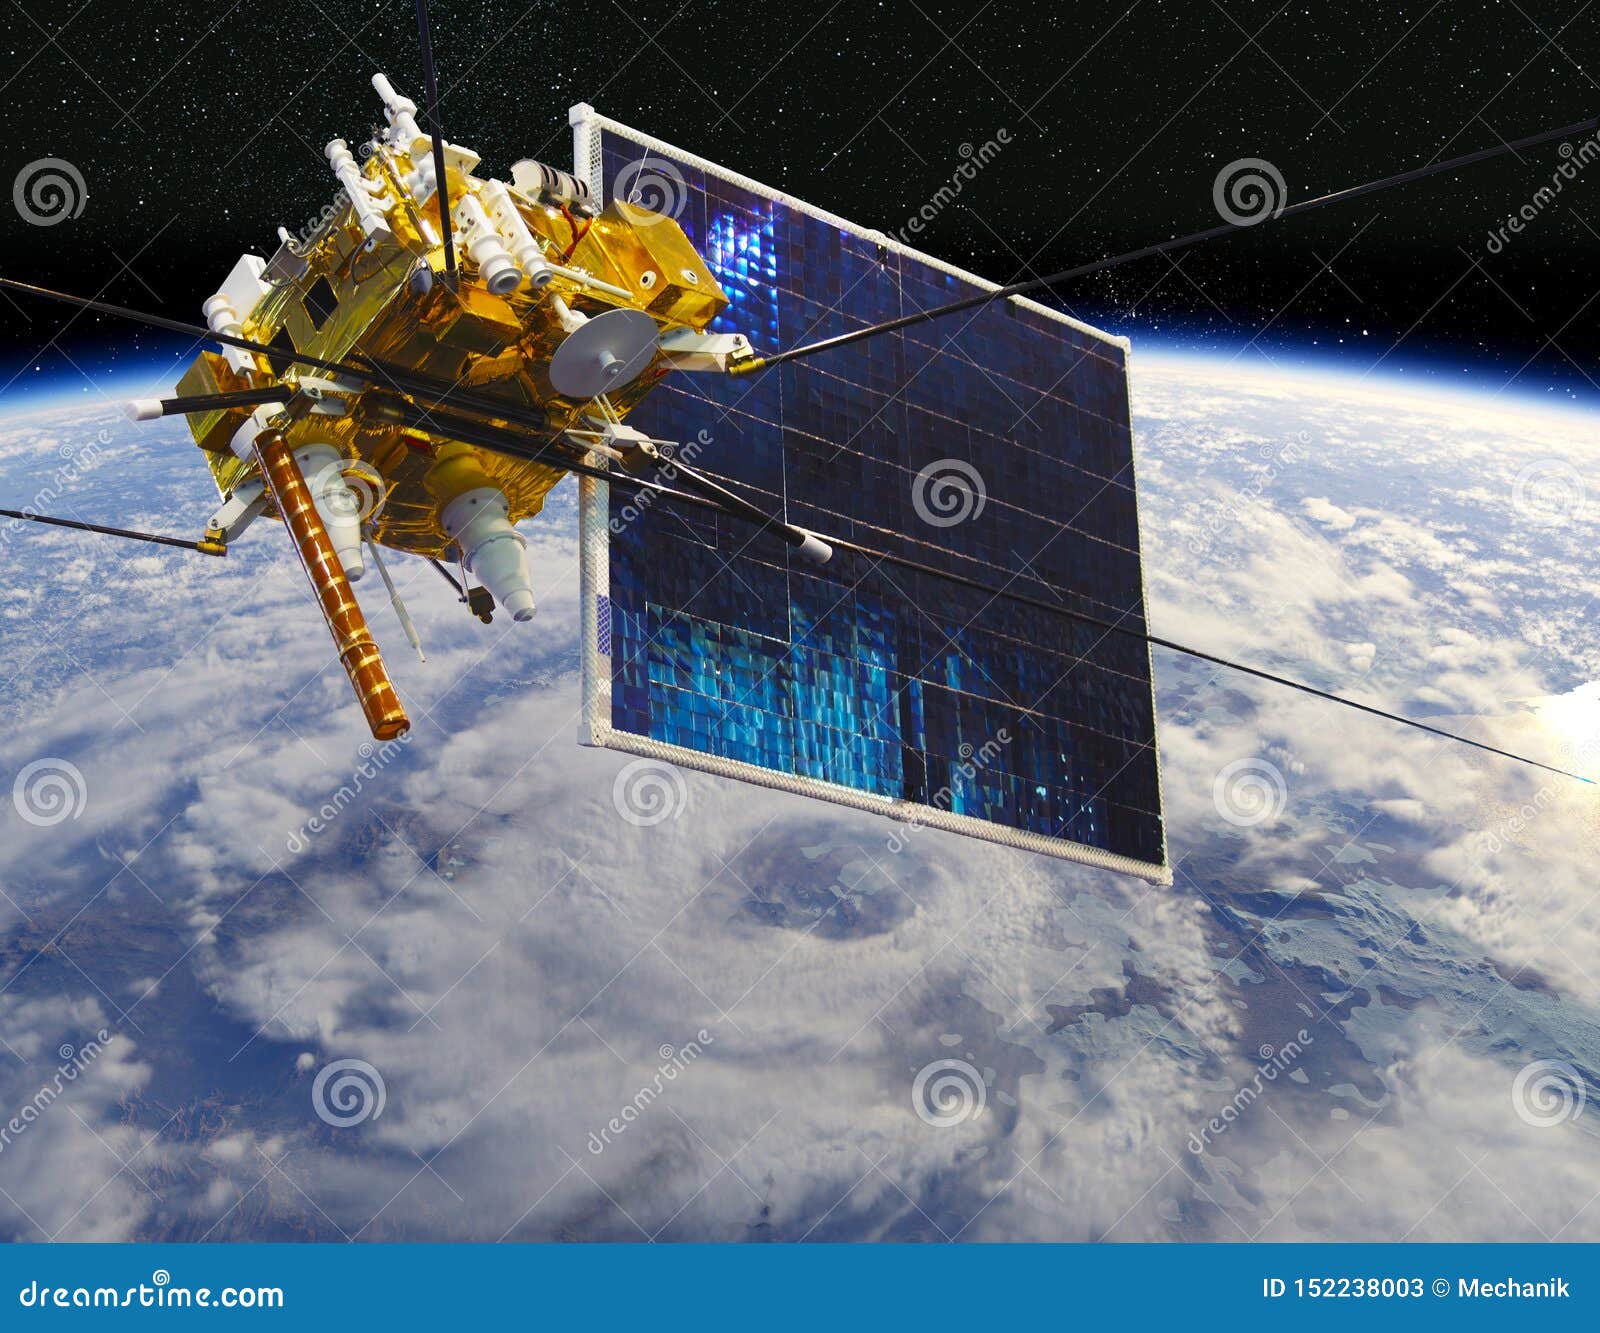 modern meteorological satellite at the earth orbit